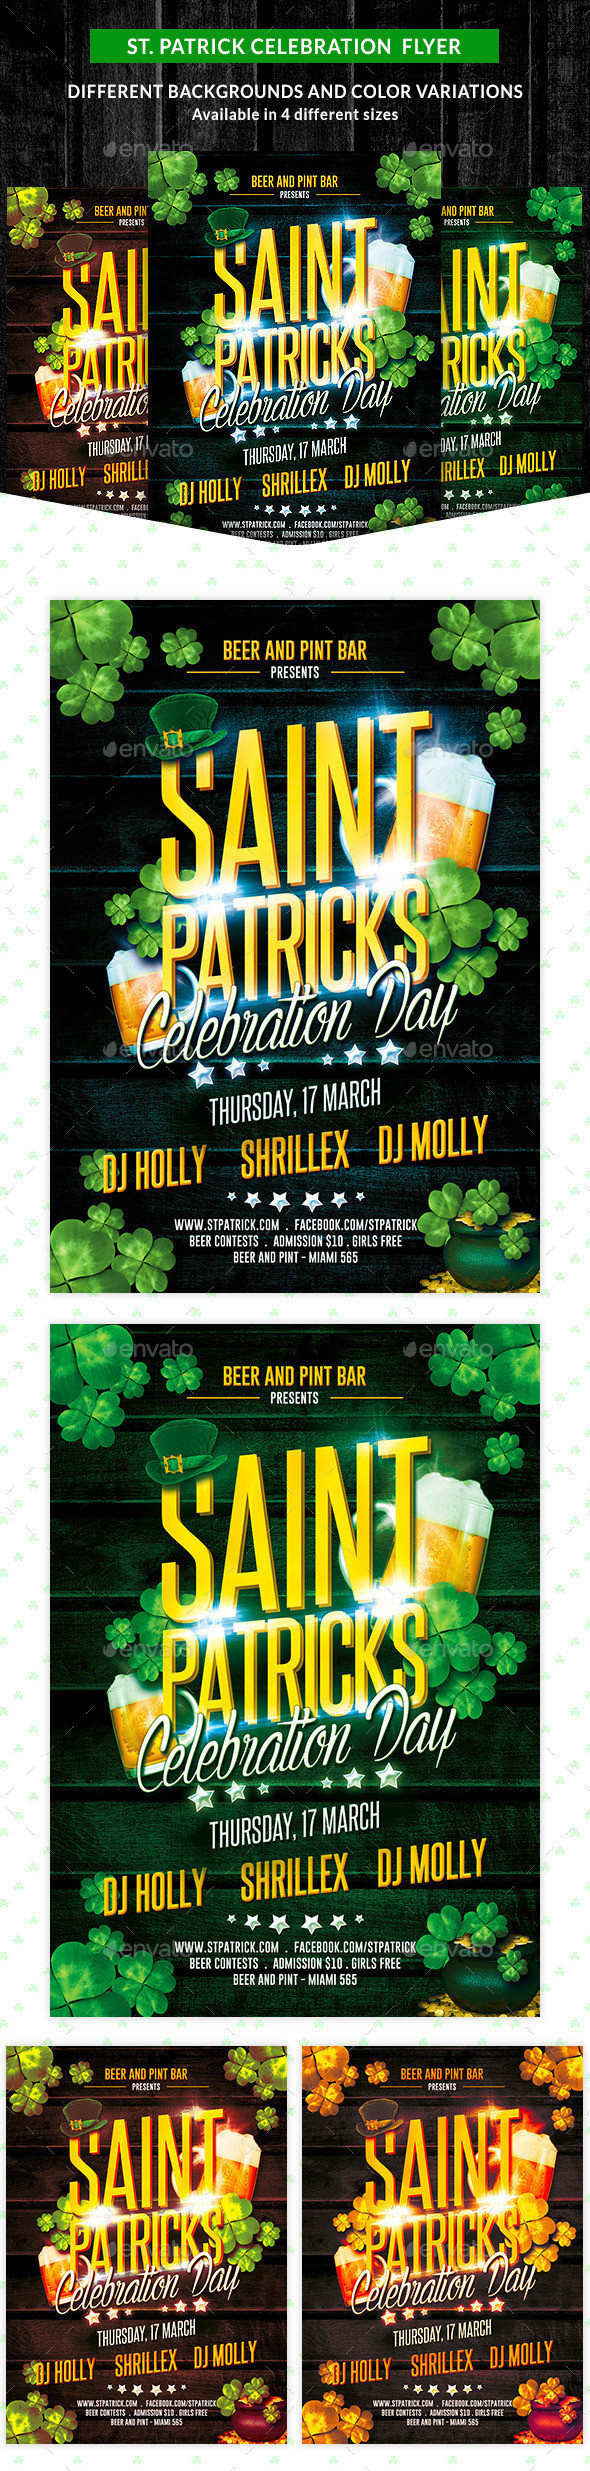 St patrick celebration flyer showcase